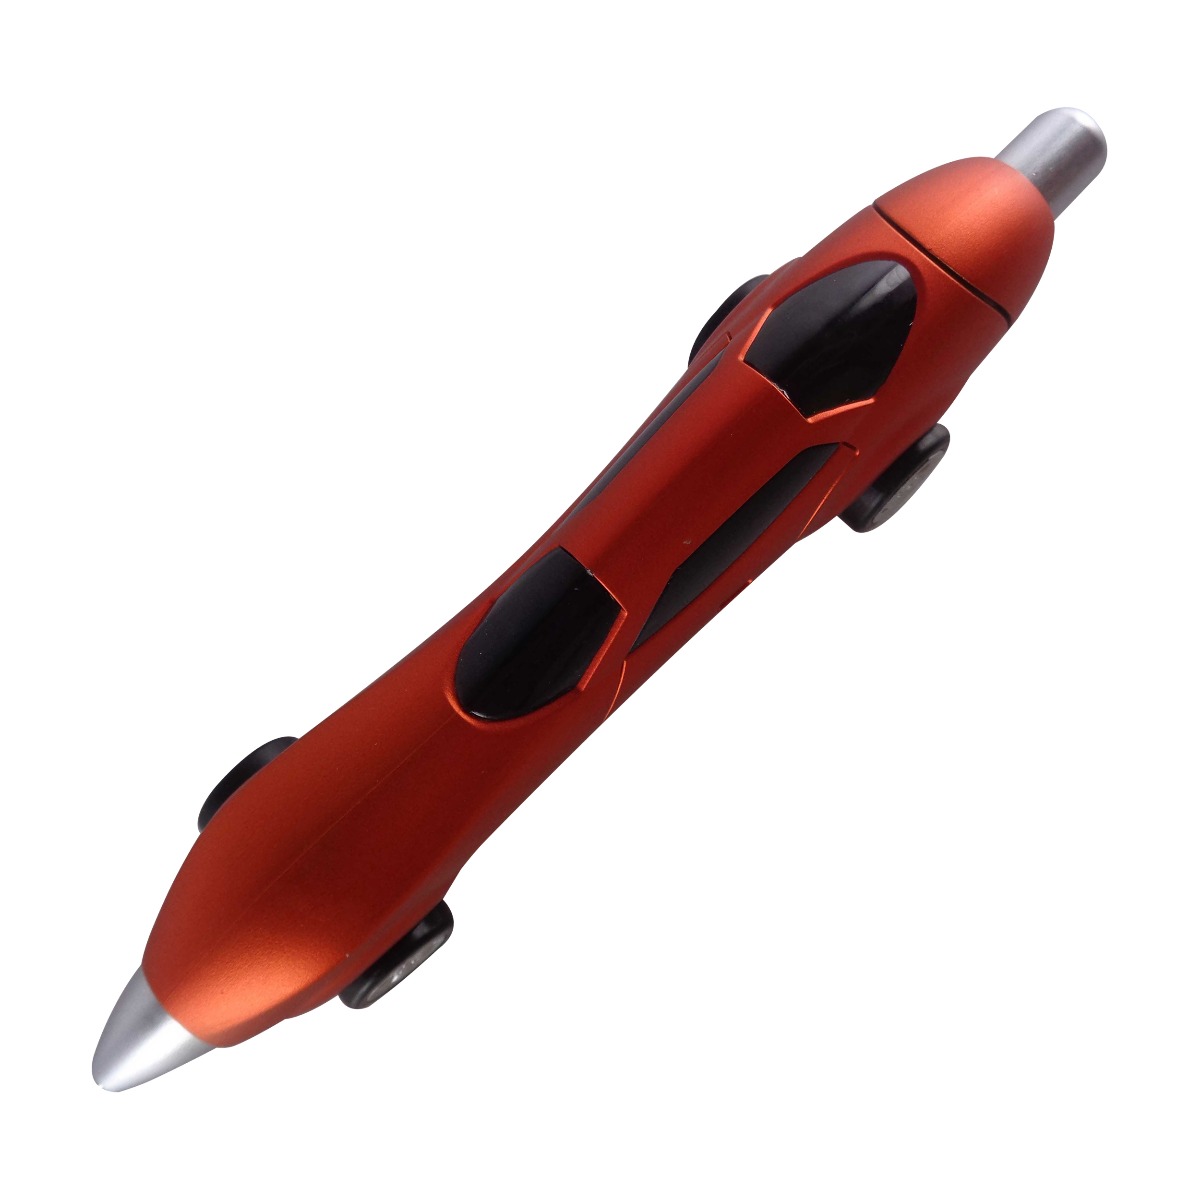 Penhouse.in Model: 14960 Orange color body with medium tip  Car design toy ball pen